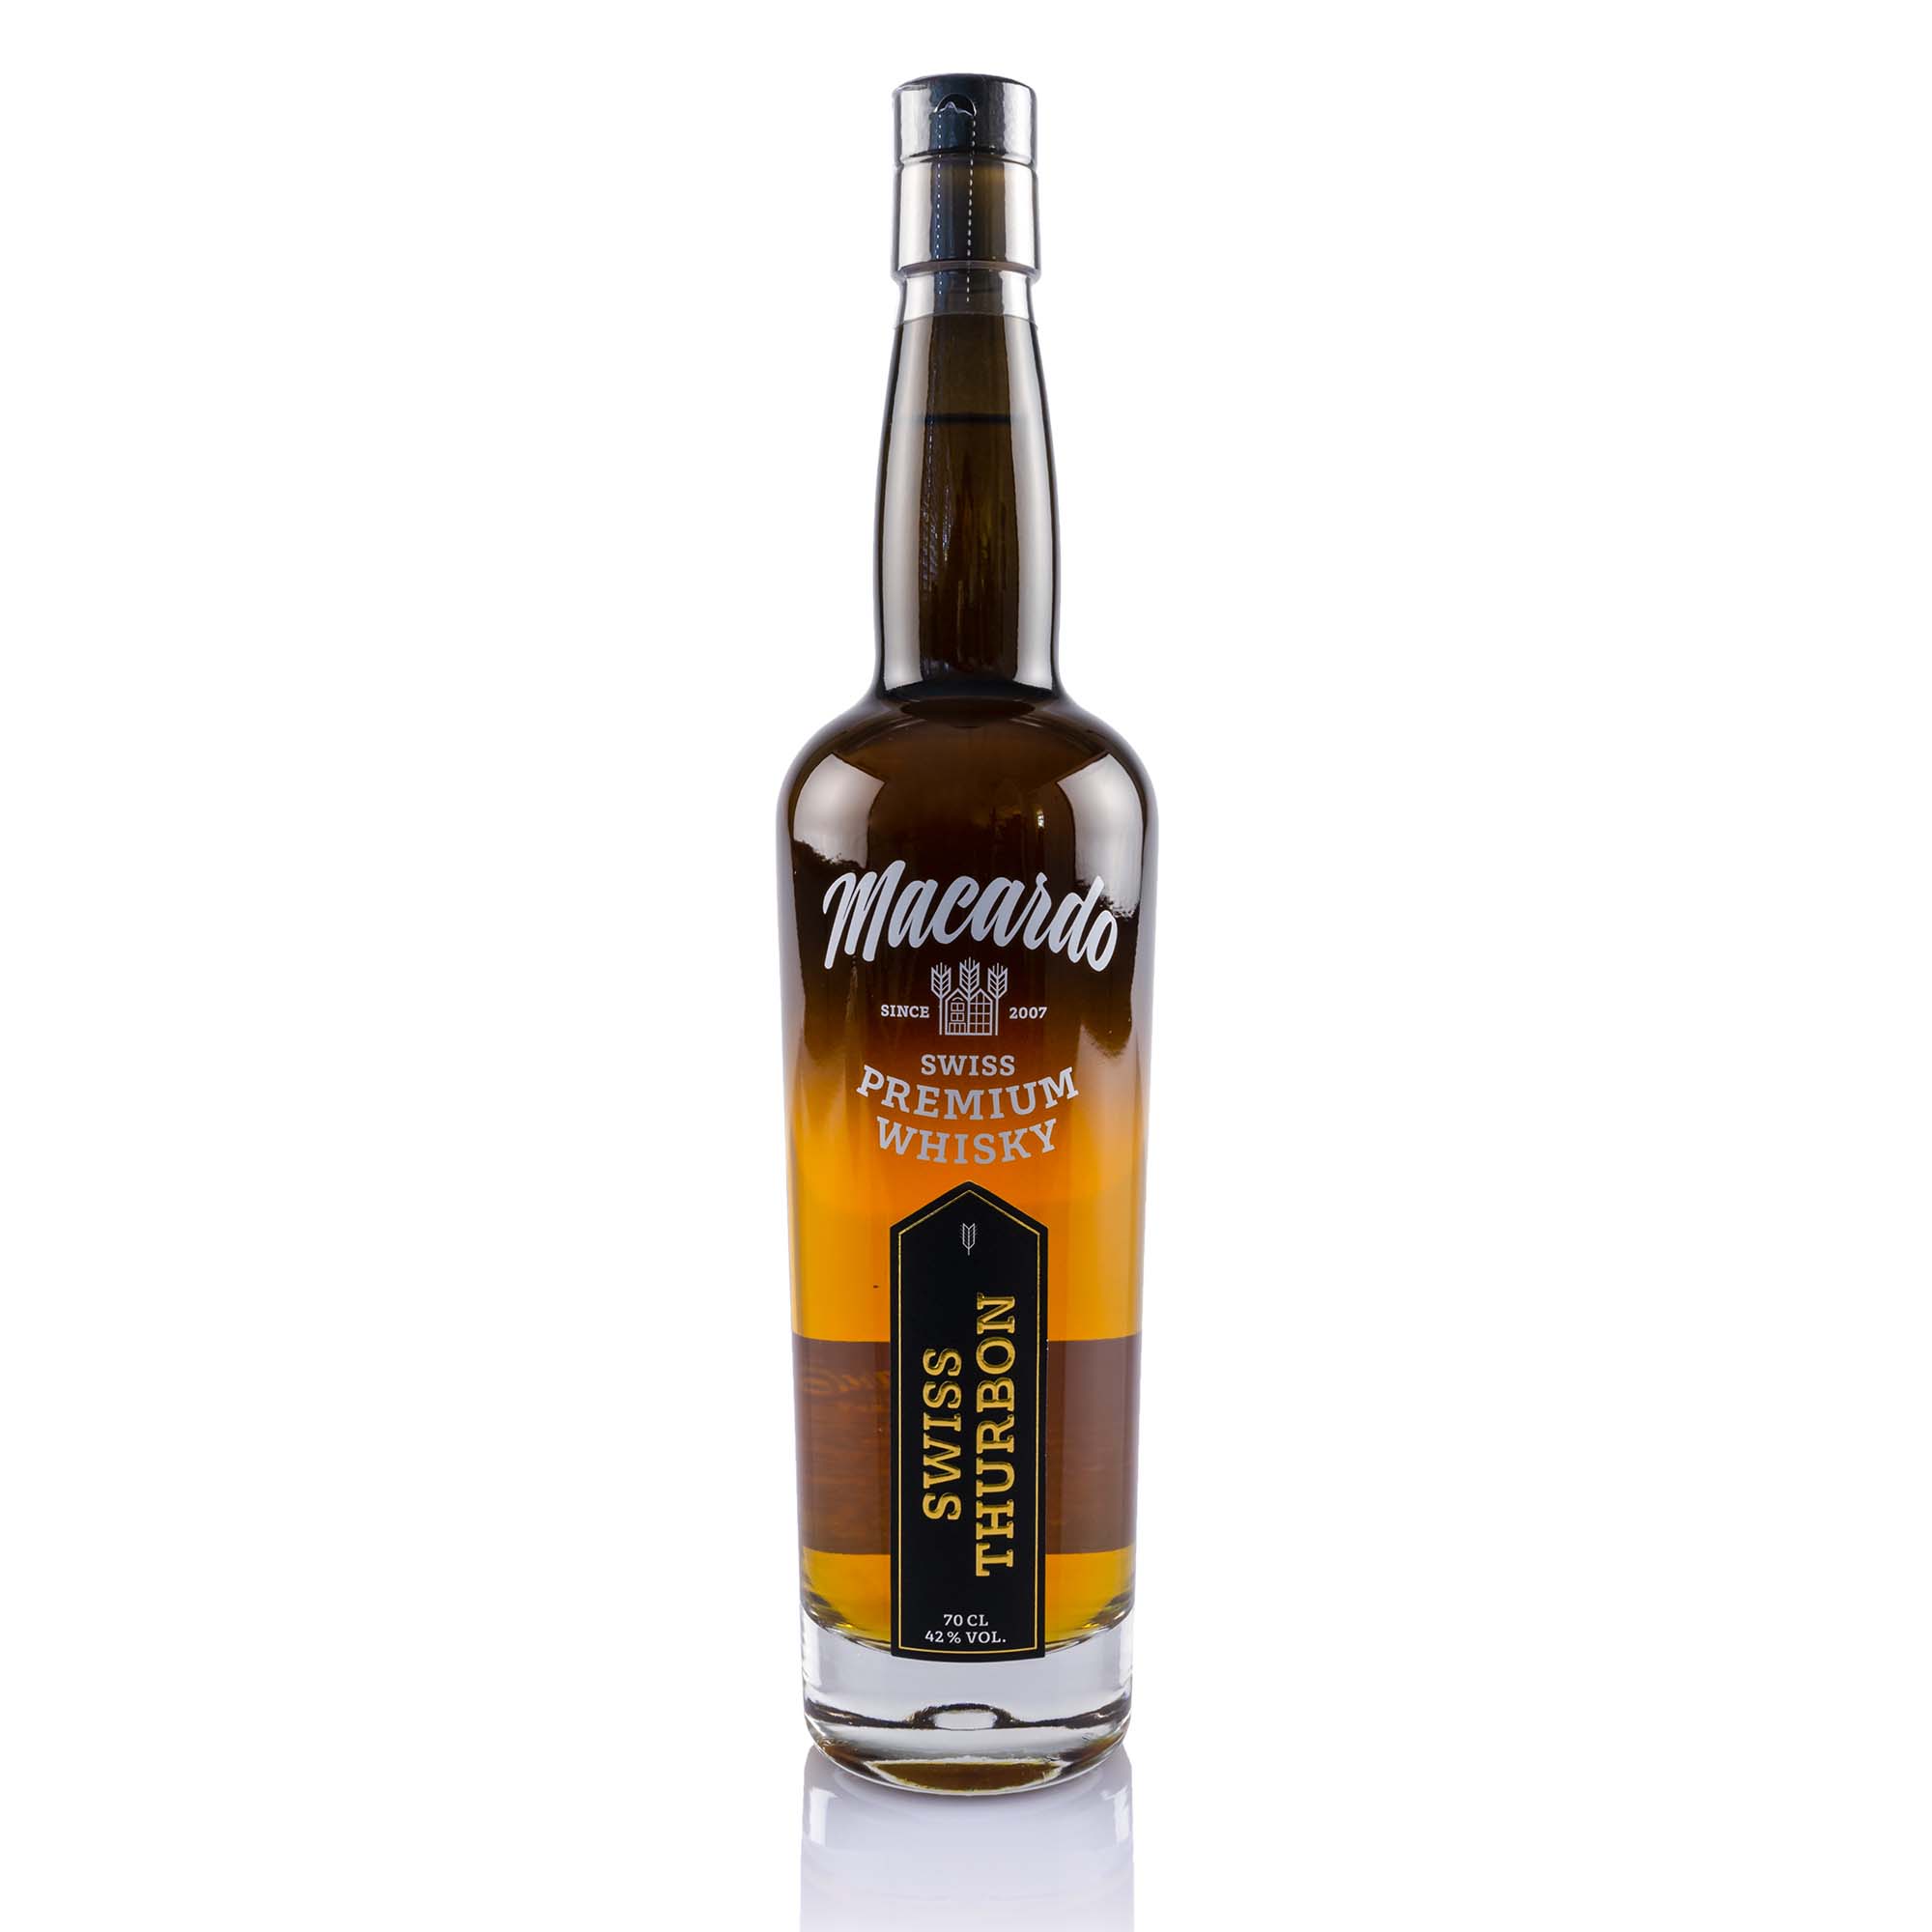 Swiss Thurbon Whisky, Macardo, 70cl, 42% Vol.